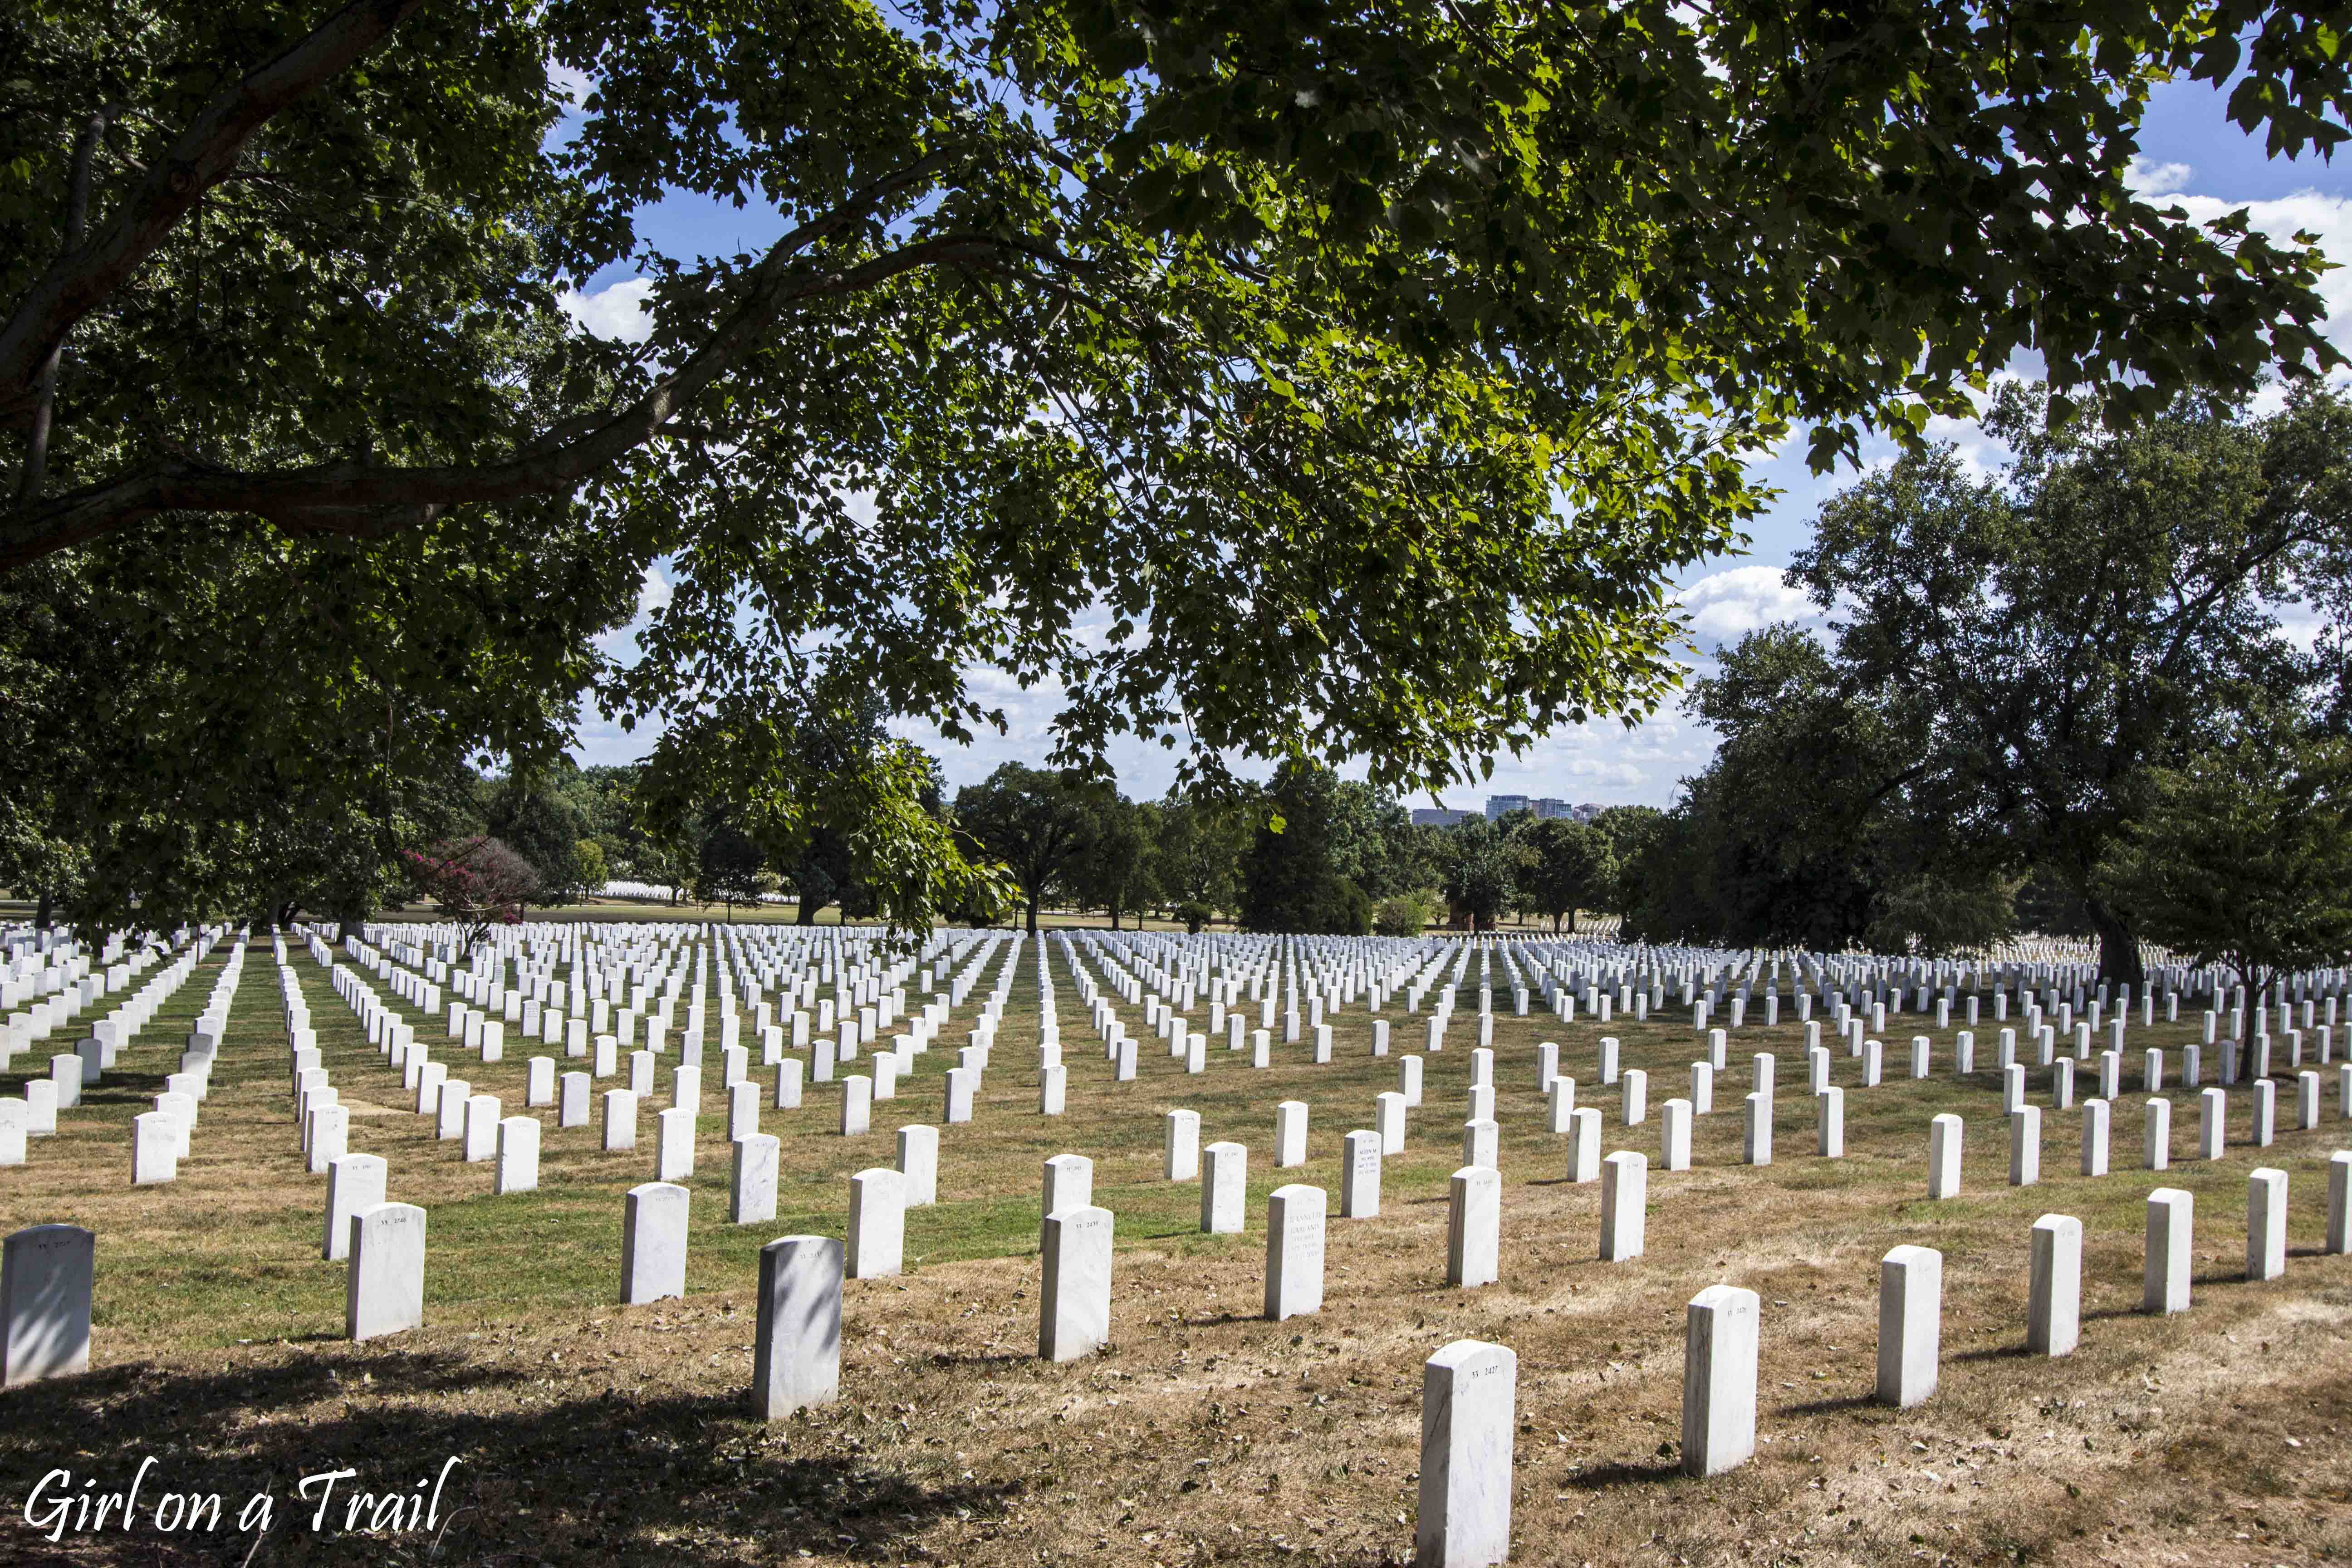 USA - Wshington D.C., Cmentarz Arlington